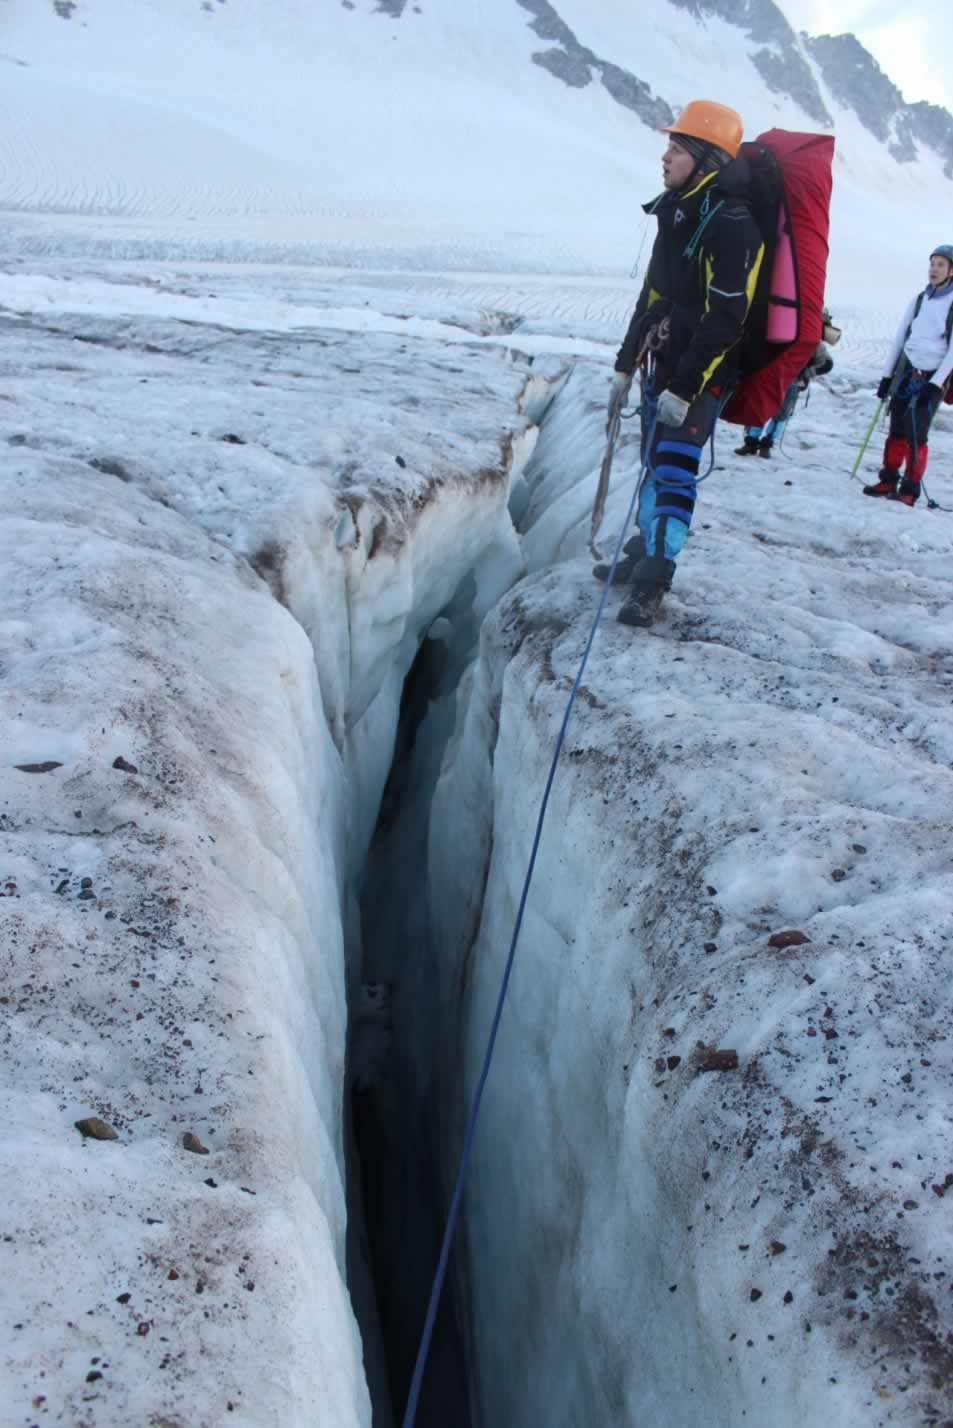 Ледник большой Азау на Кавказе